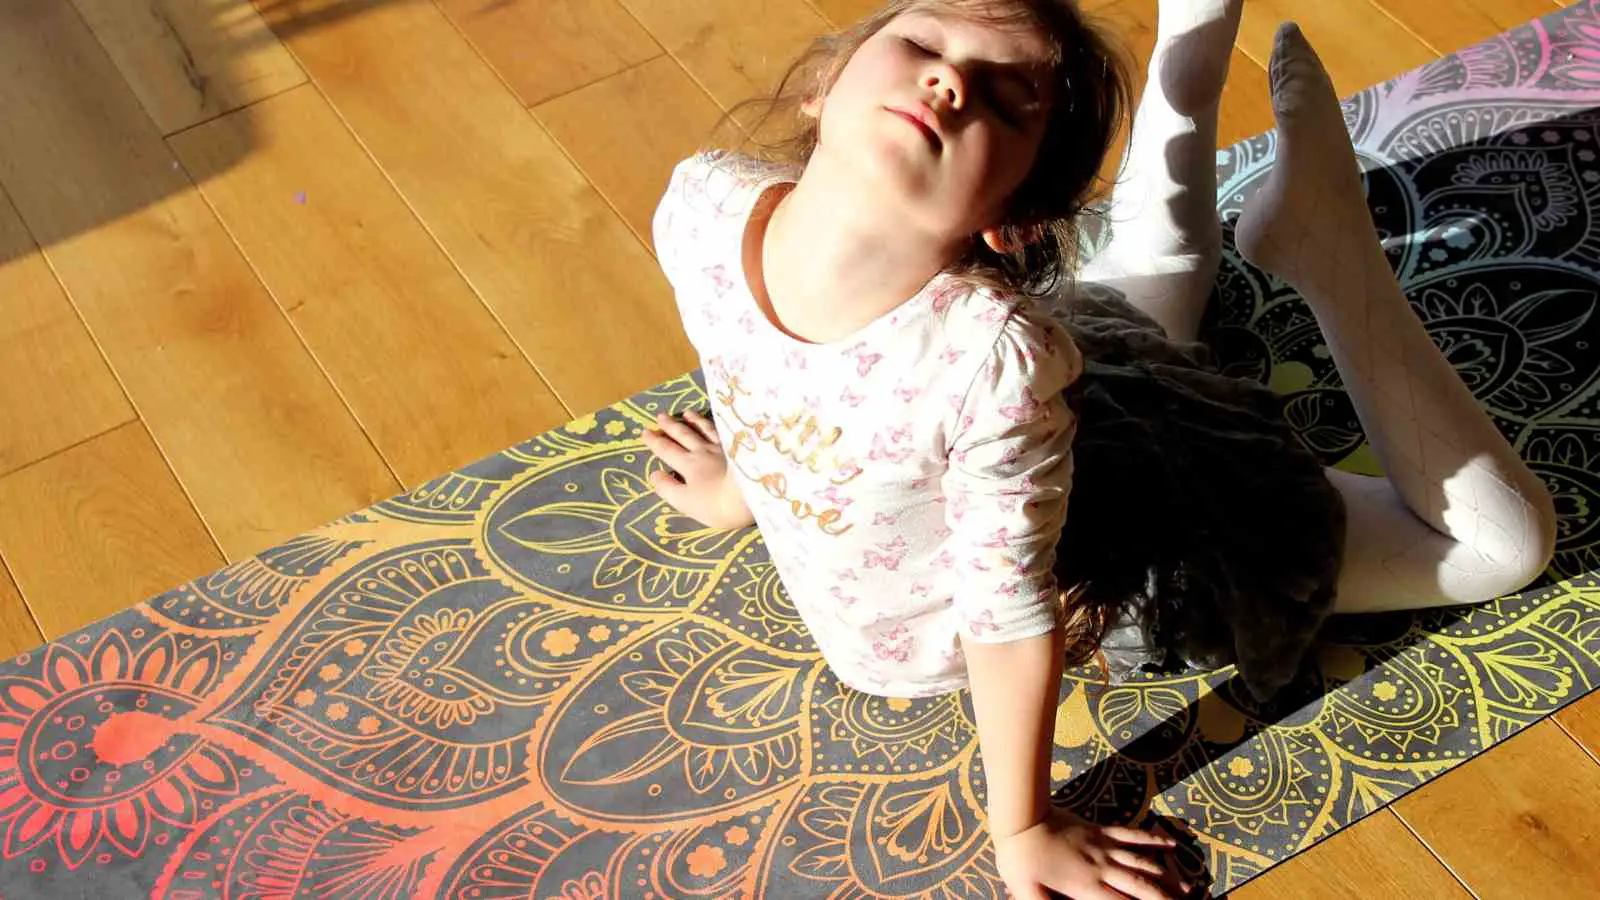 Little yogini on adult-size eco-friendly yoga mat